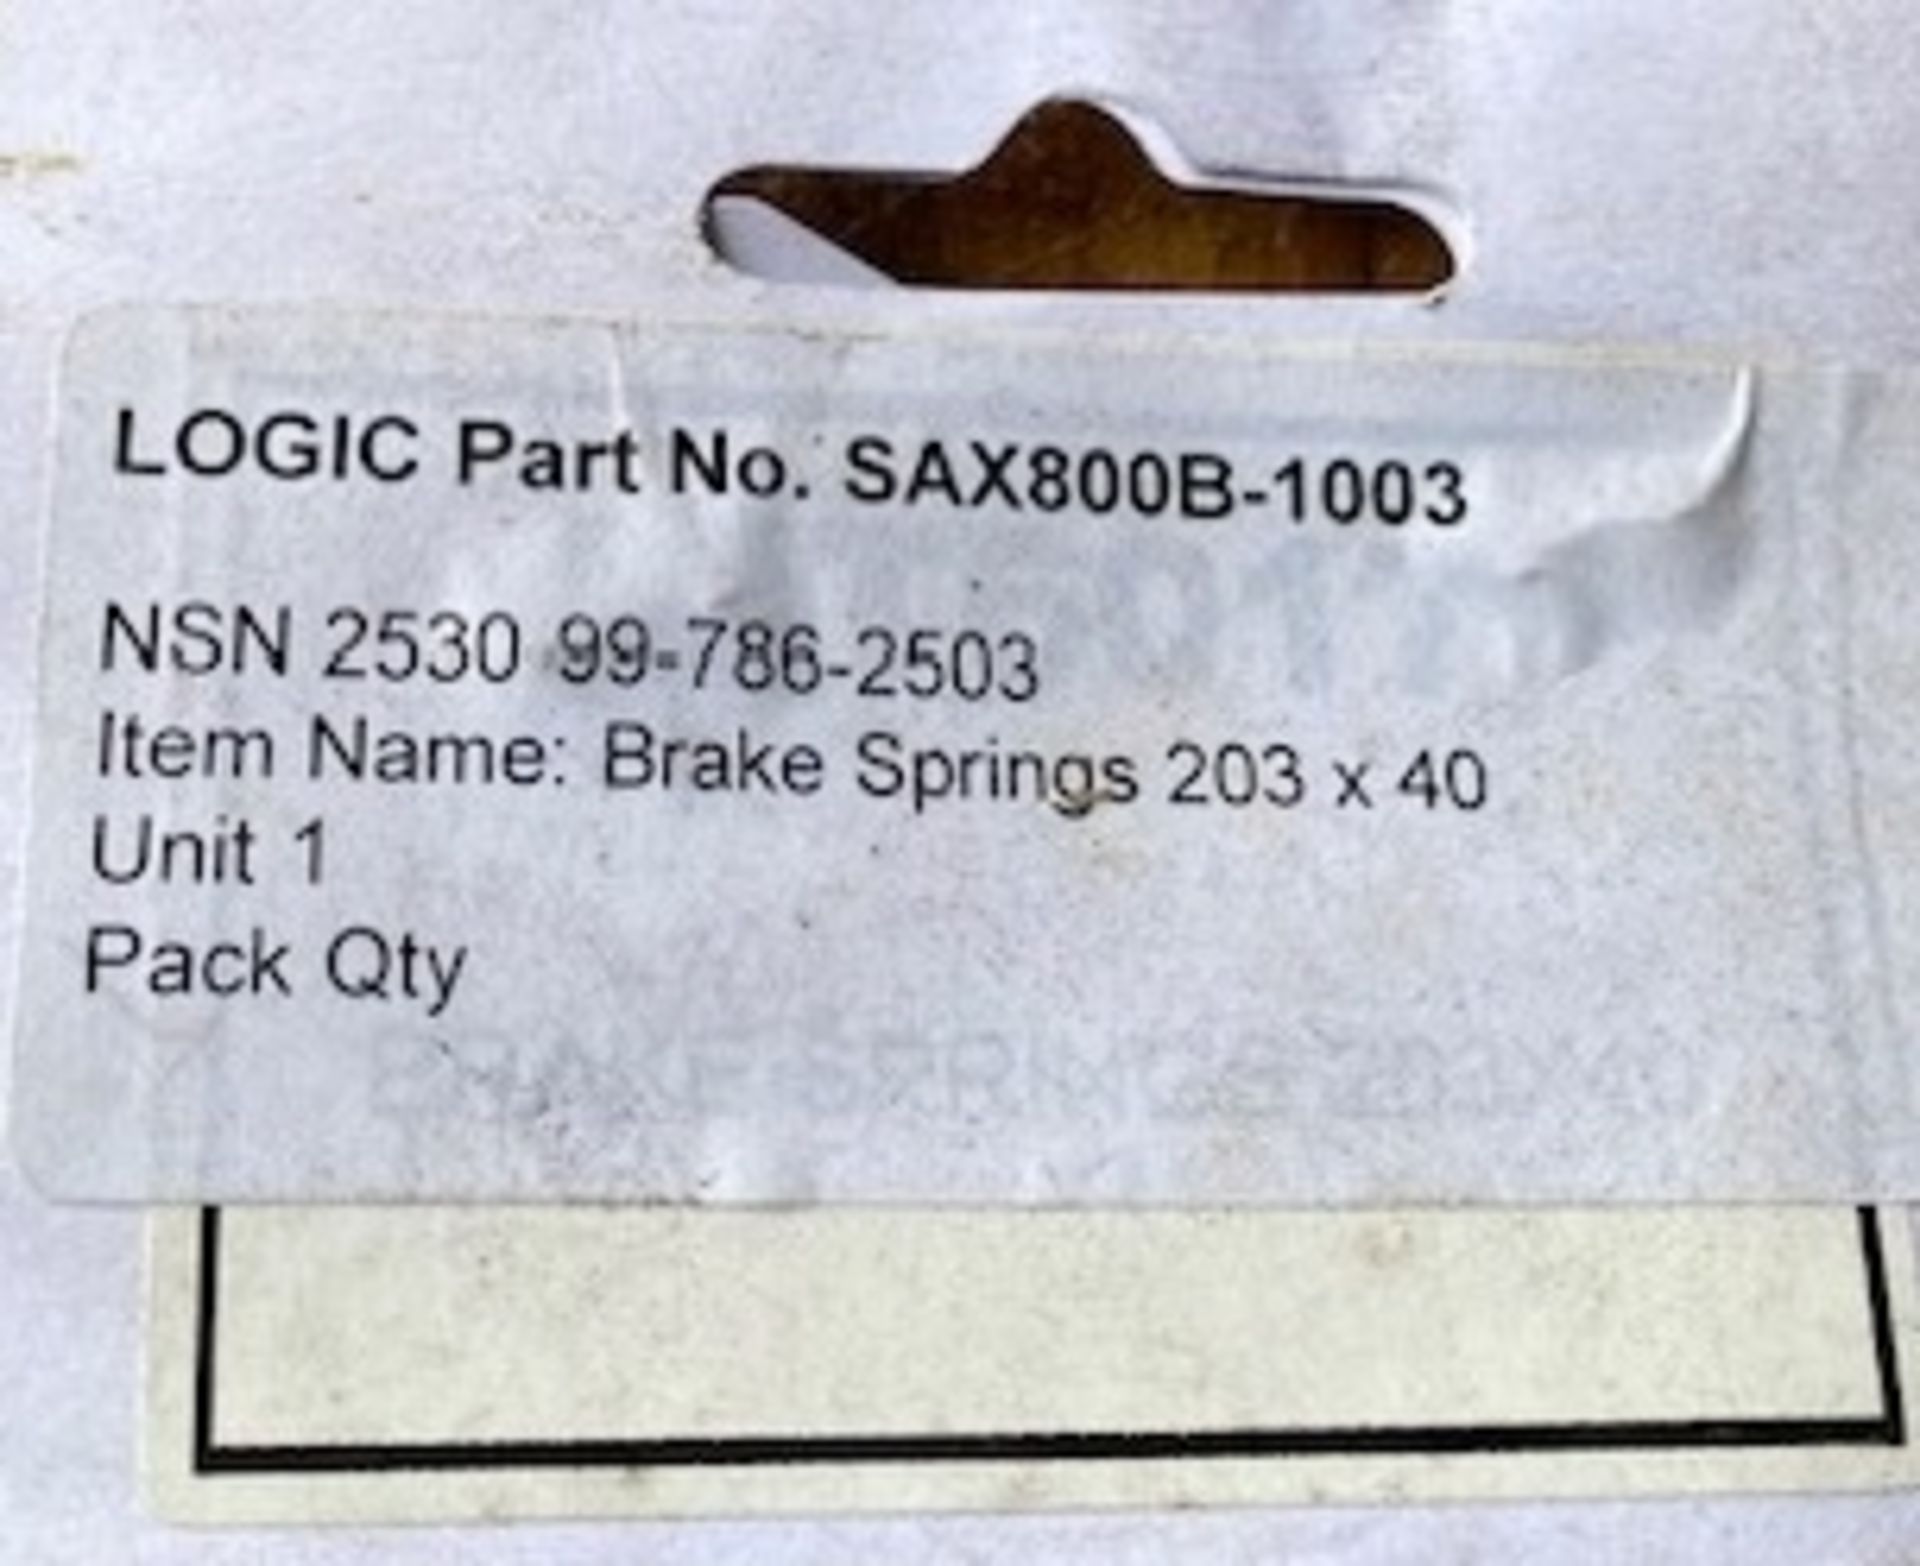 QTY 50 (10 Small Packs x 5) Brake Springs Kit - Image 3 of 6